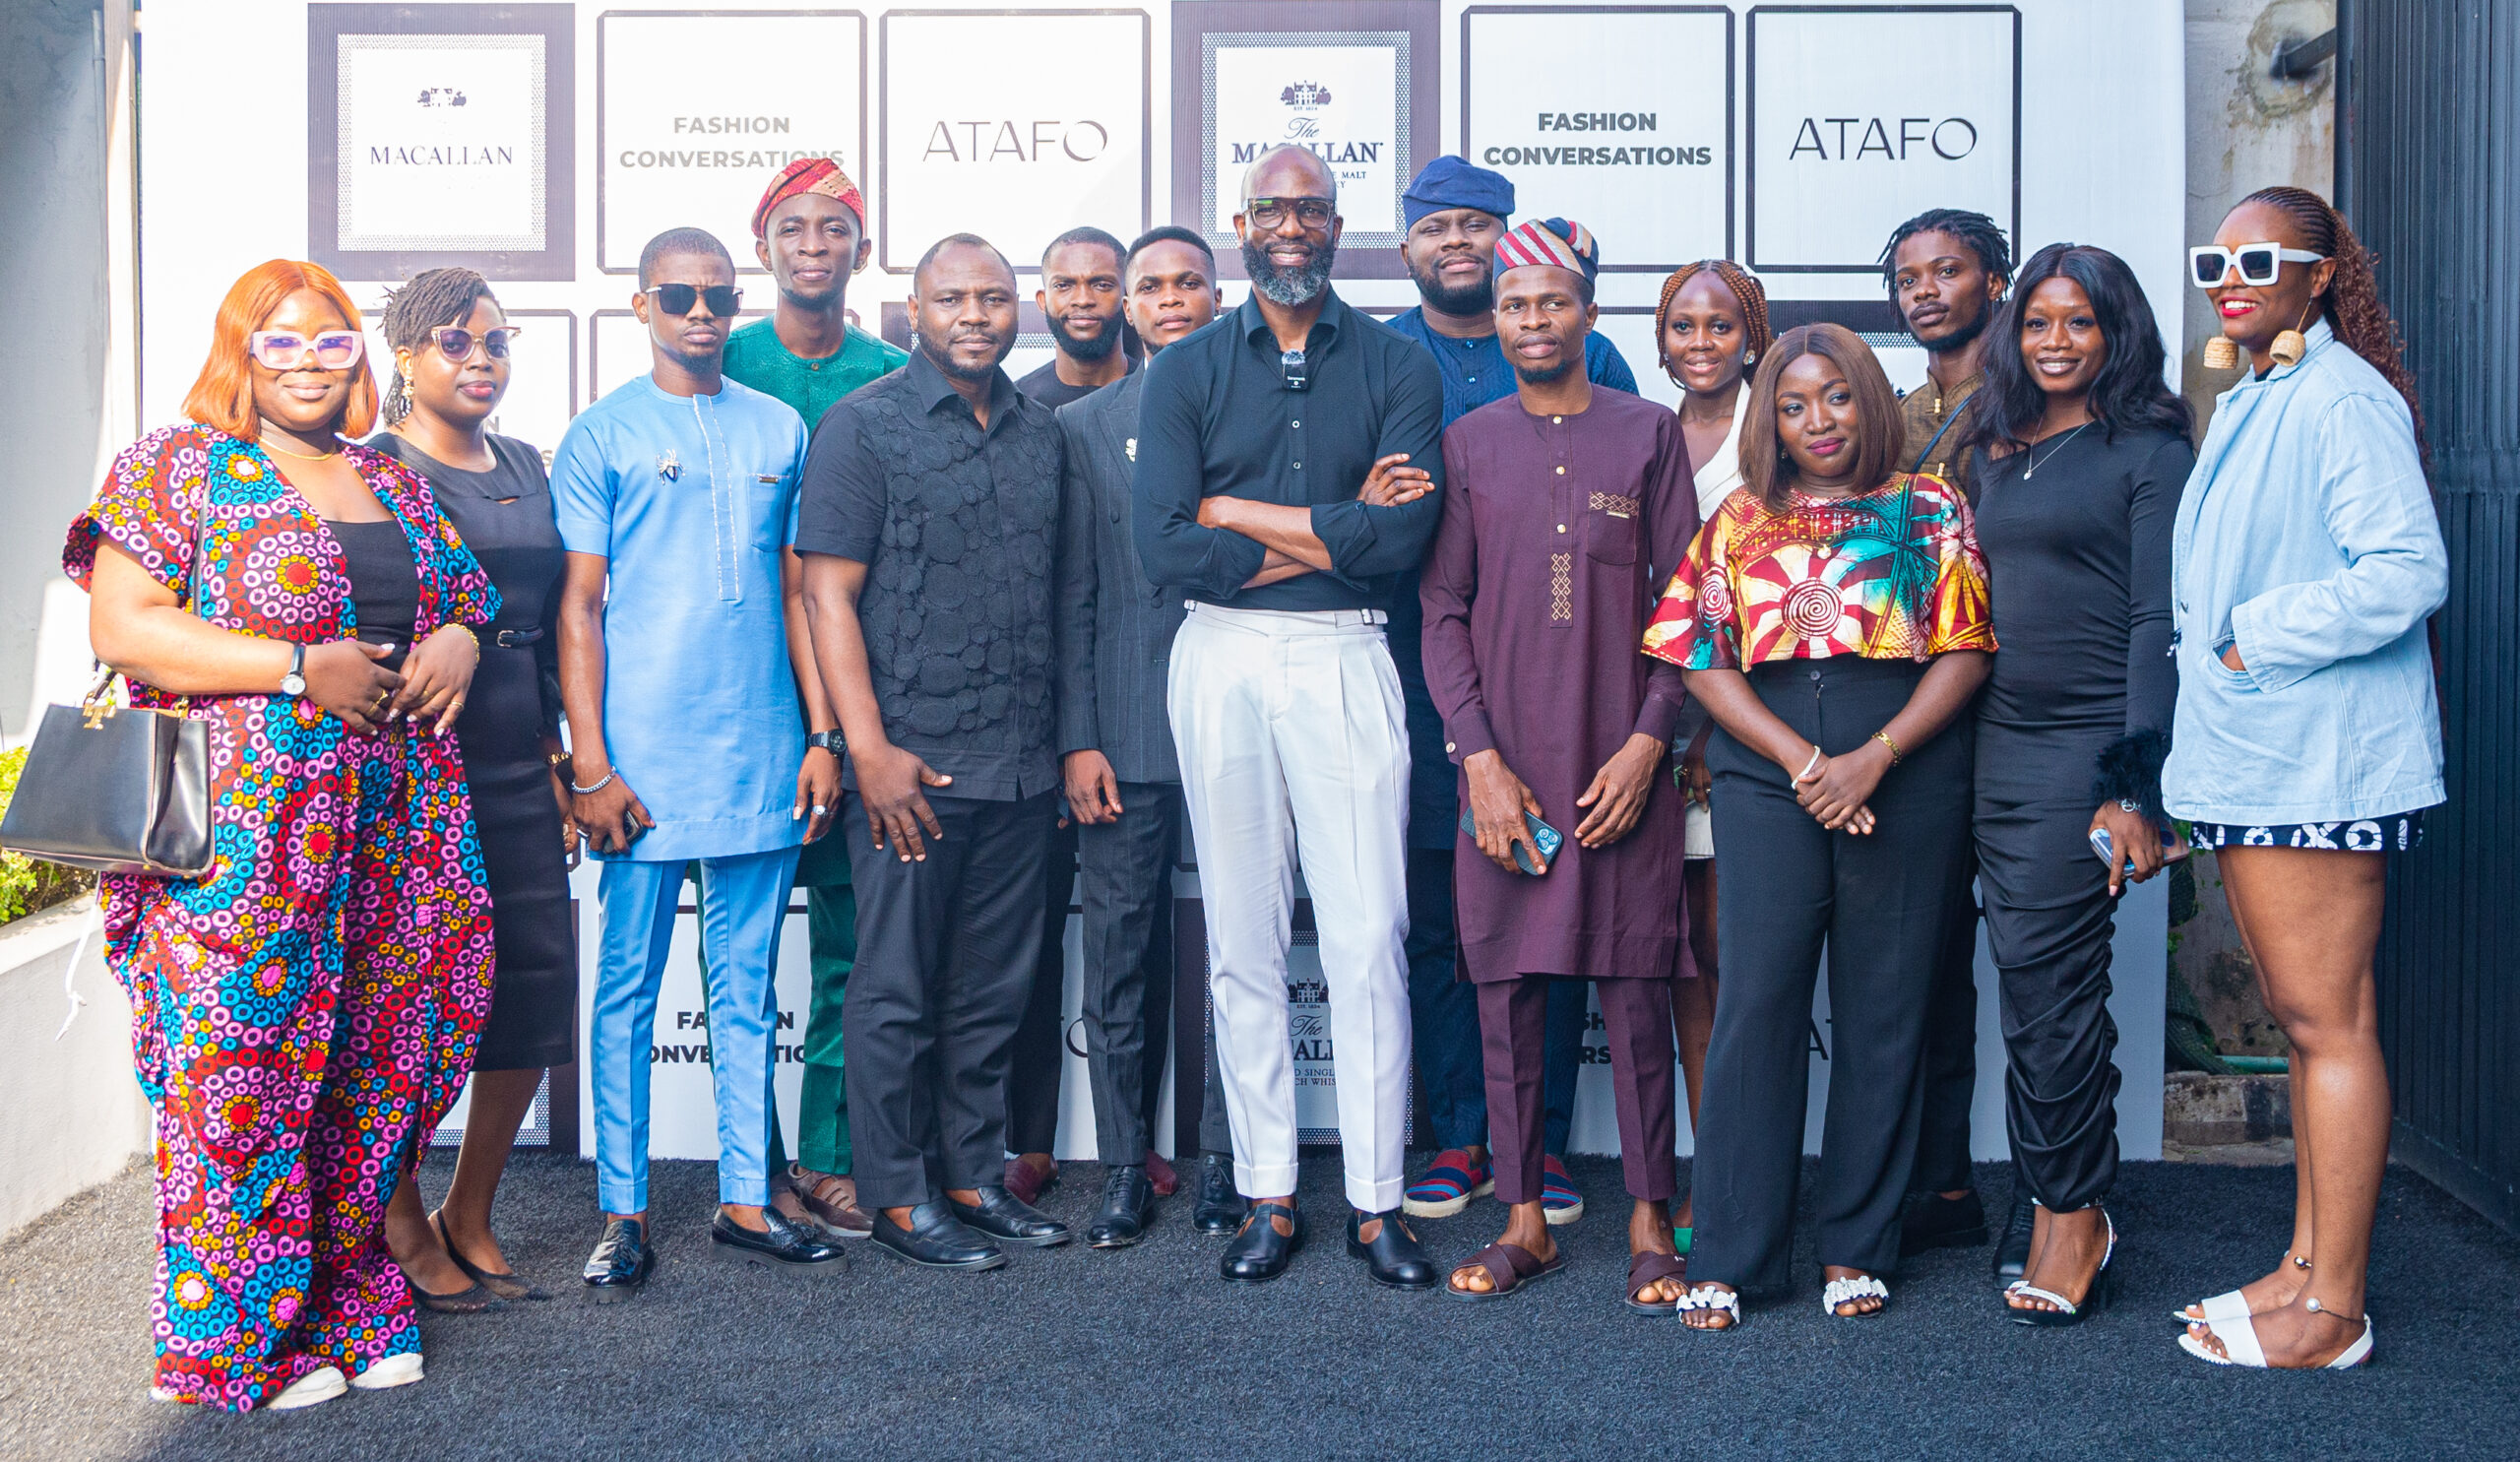 The Macallan Collaborates with Mai ATAFO to Mentor Aspiring Fashion Entrepreneurs in Nigeria